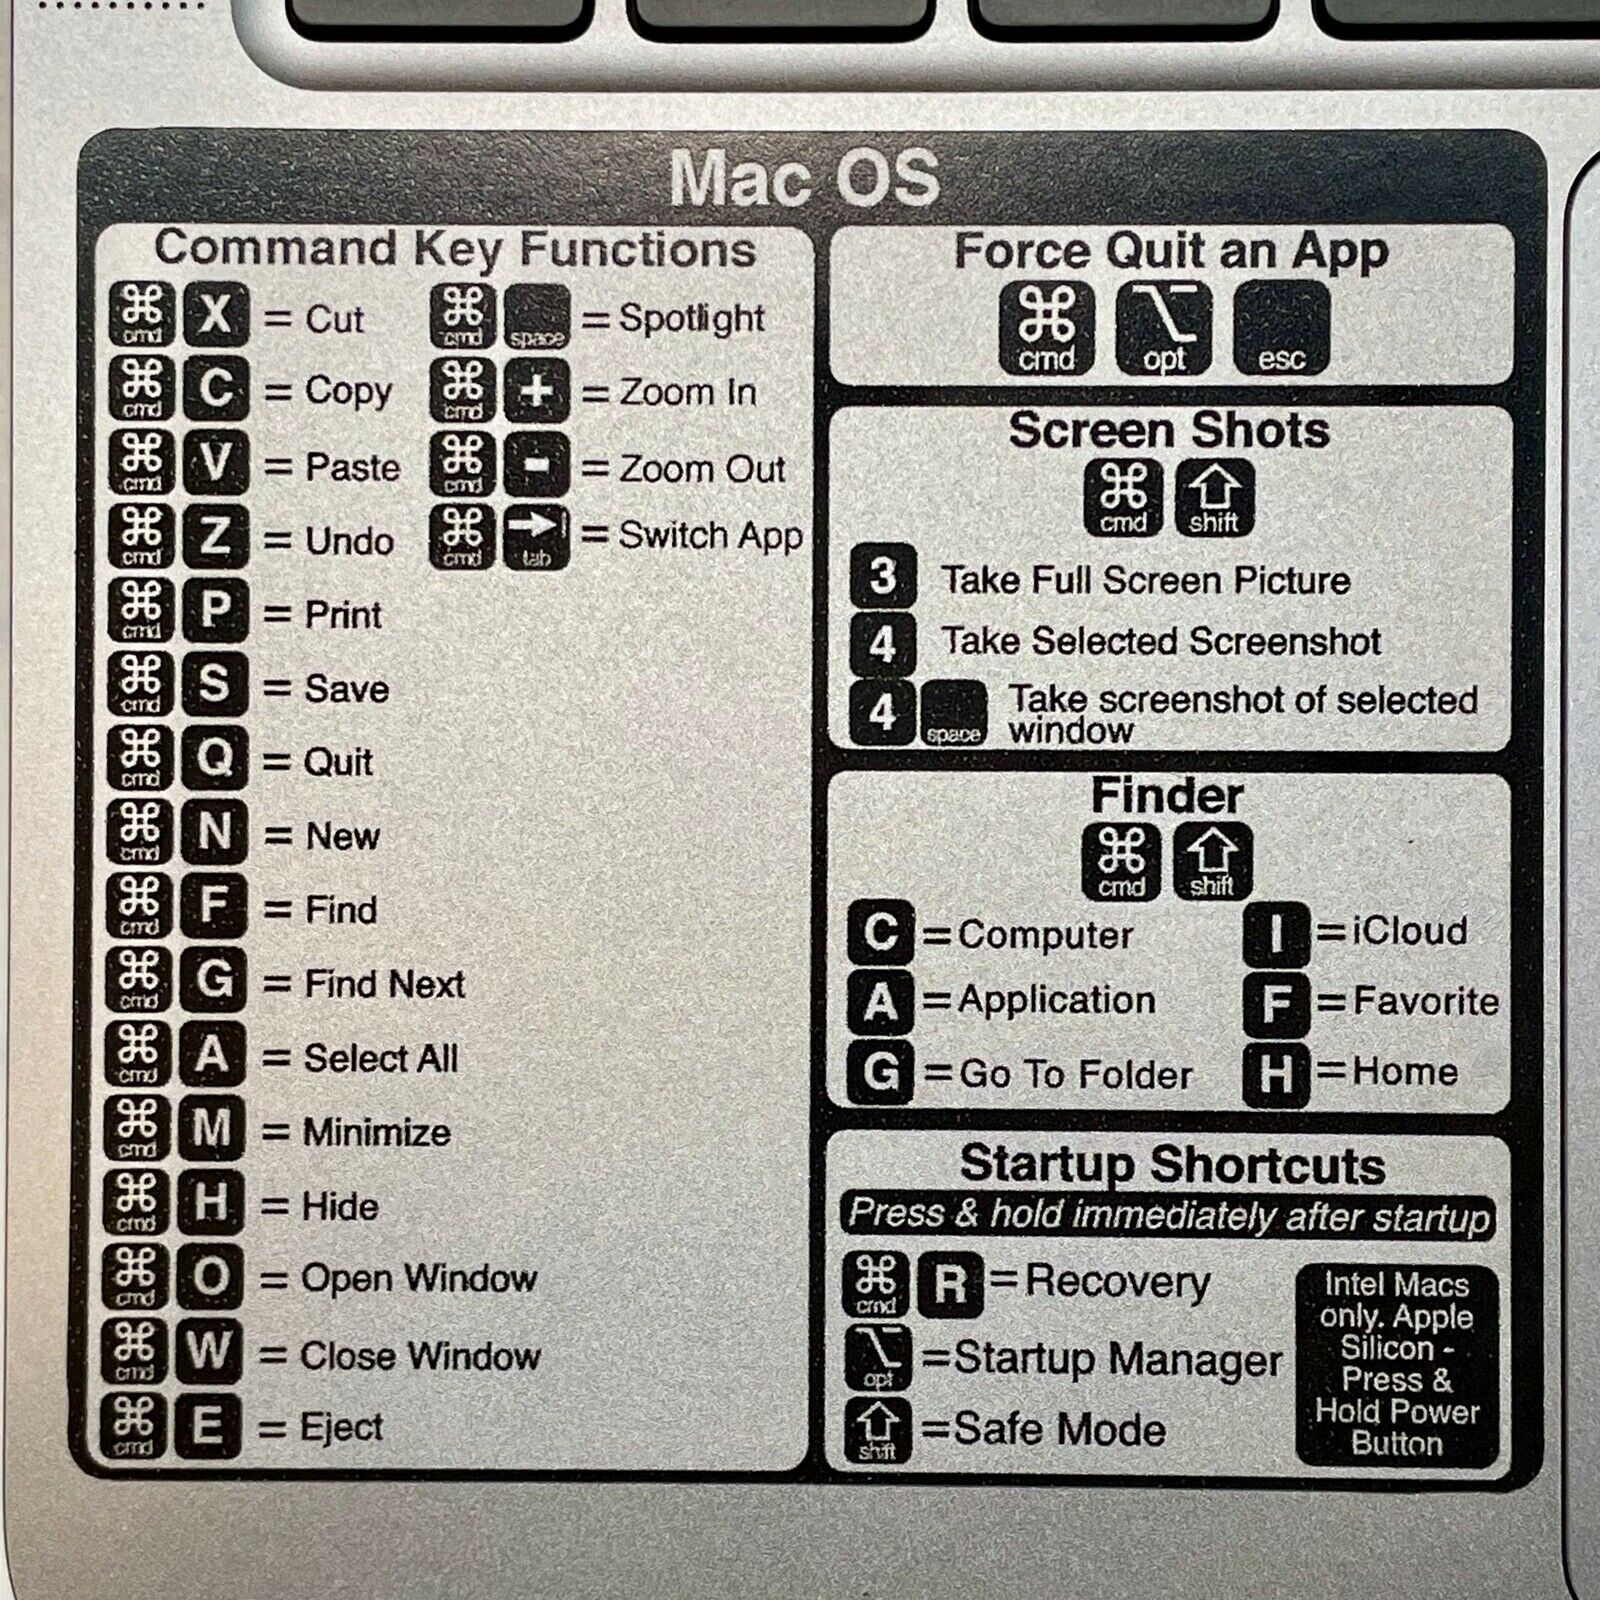 Mac Os Keyboard Shortcut Vinyl Decal Sticker Macbook, Air, Pro, M1. 2021 Update!